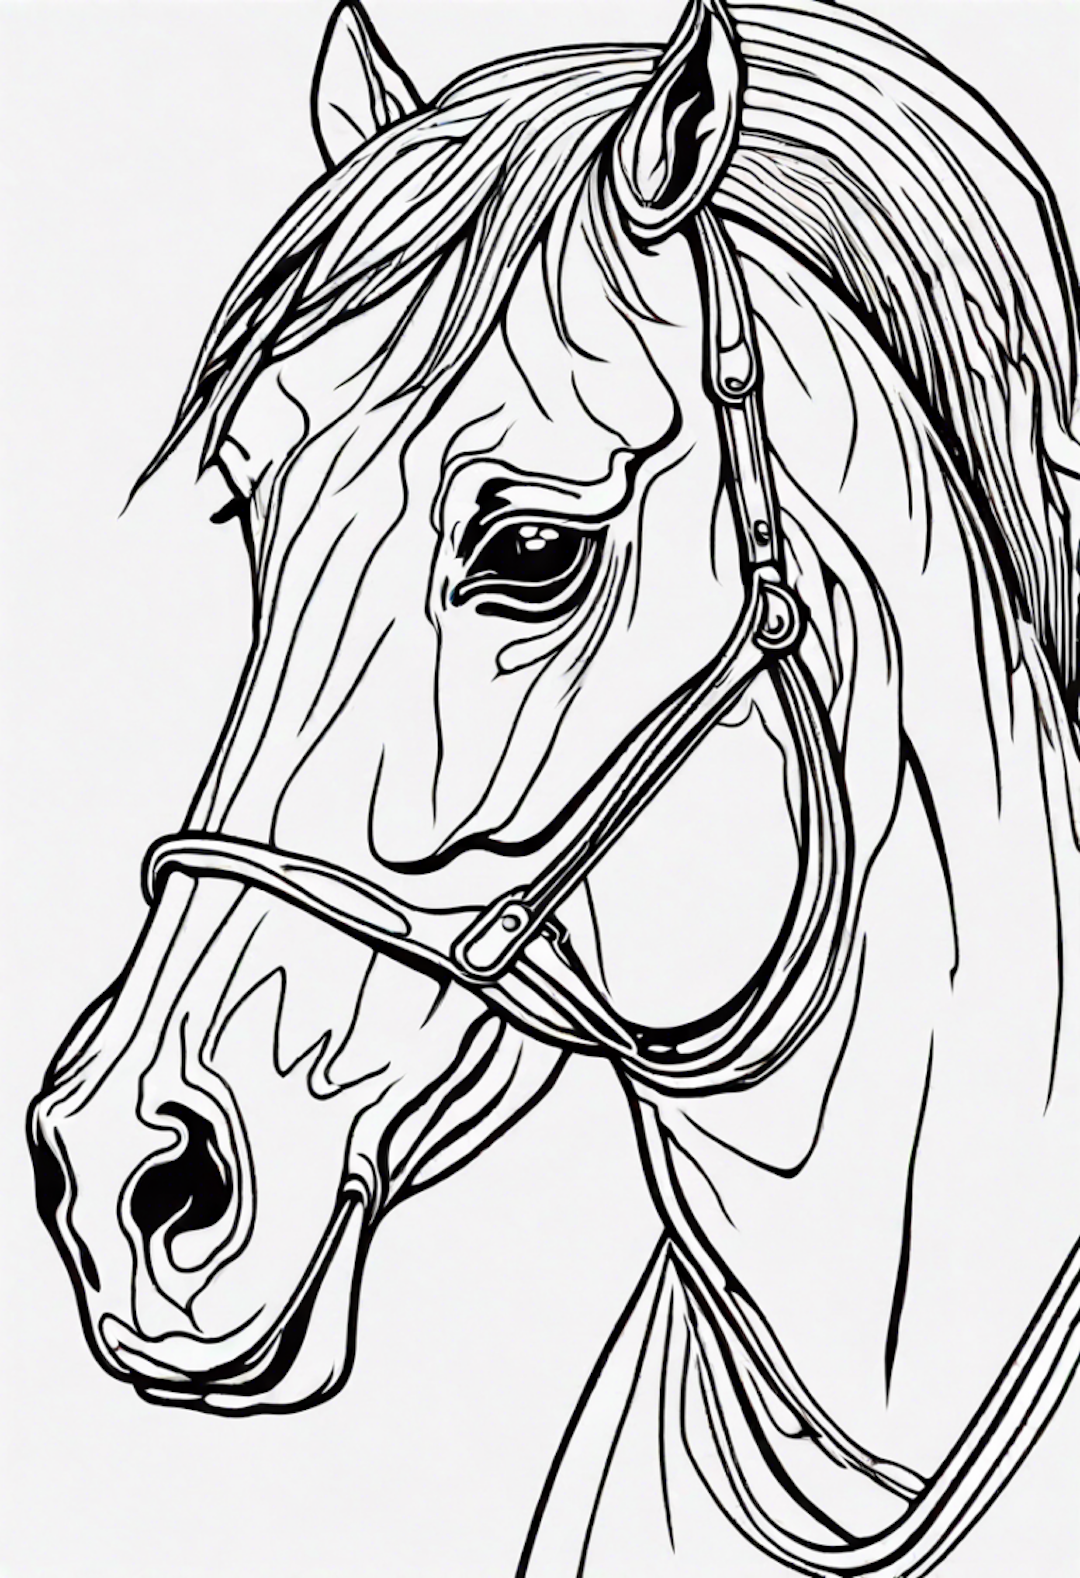 Majestic Horse Portrait Coloring Page coloring pages